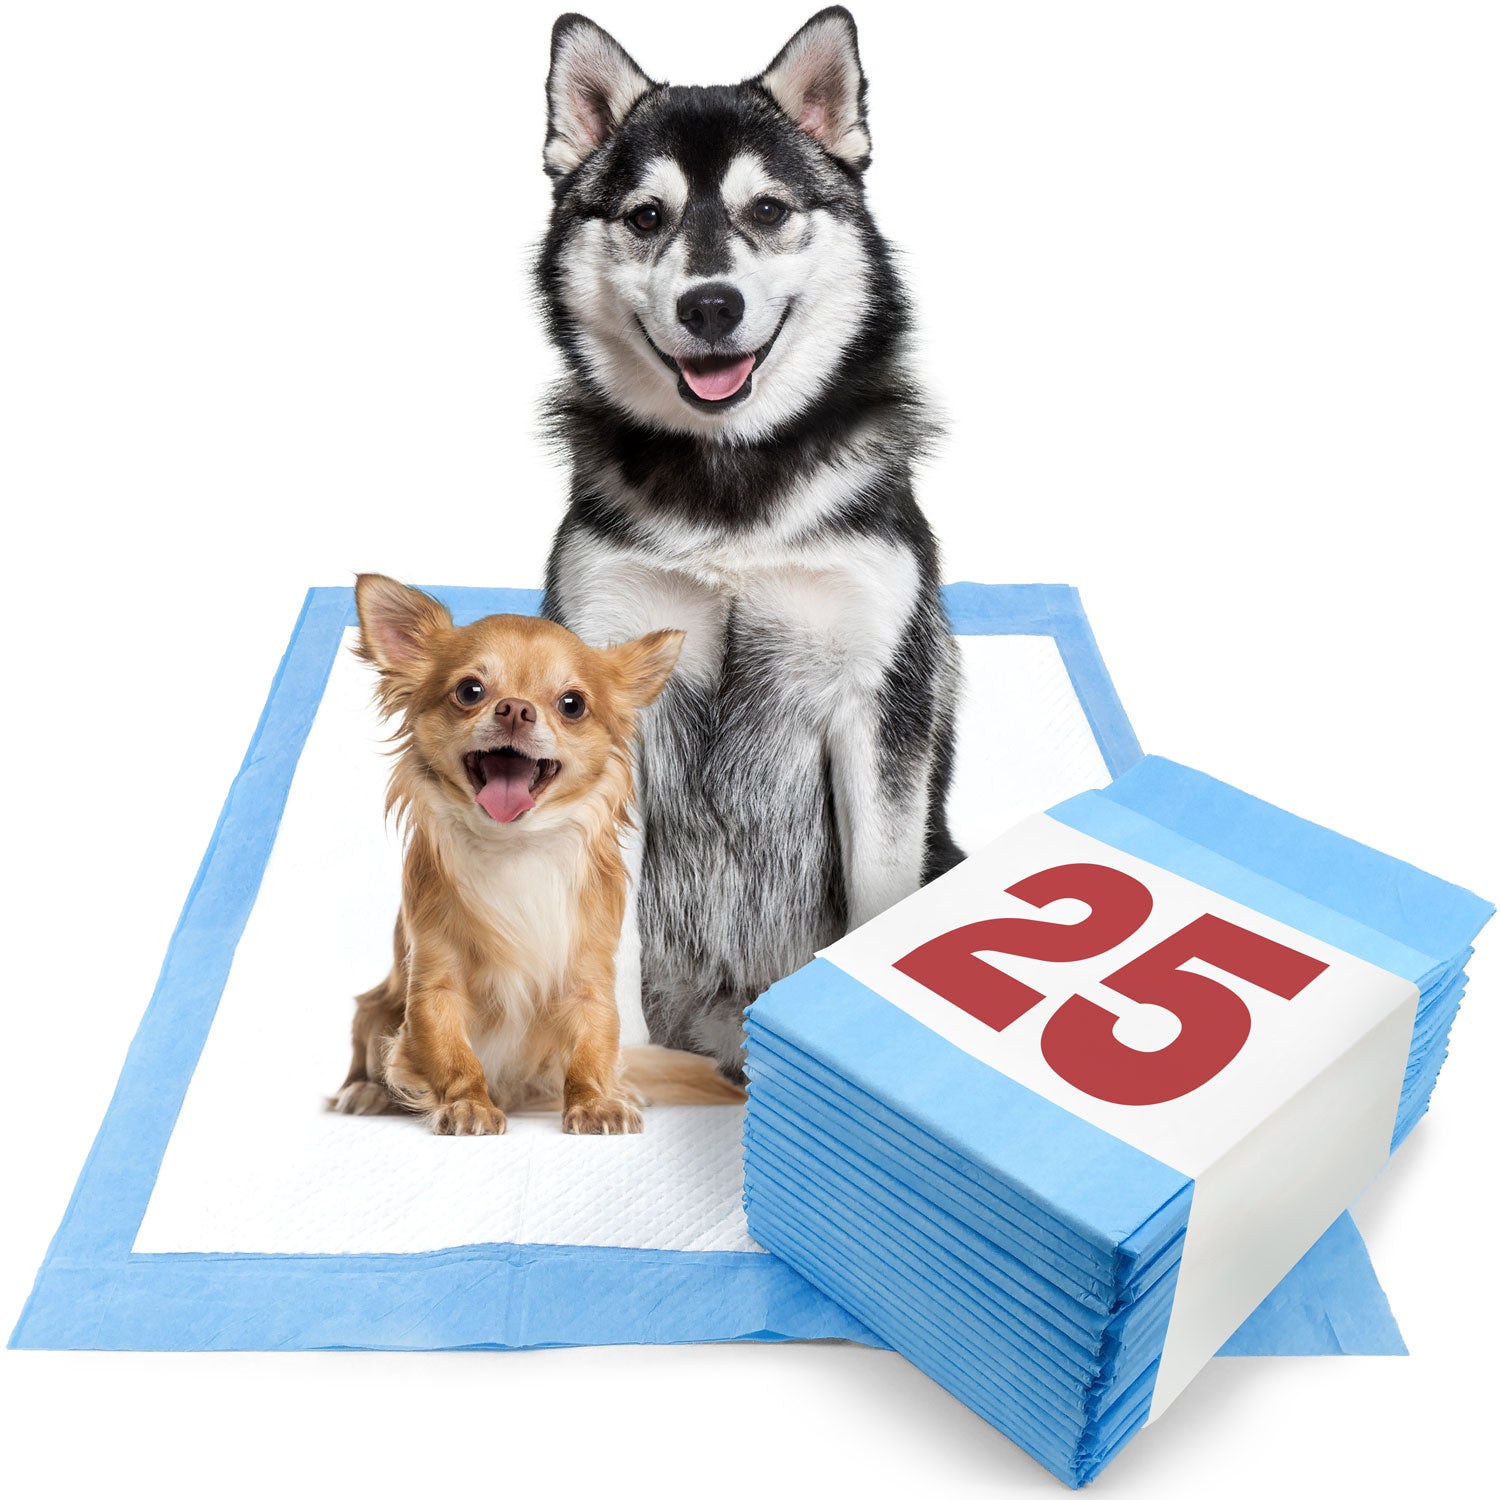 ValuePad Puppy Pads, XXL Gigantic 28x44 Inch, 25 Count